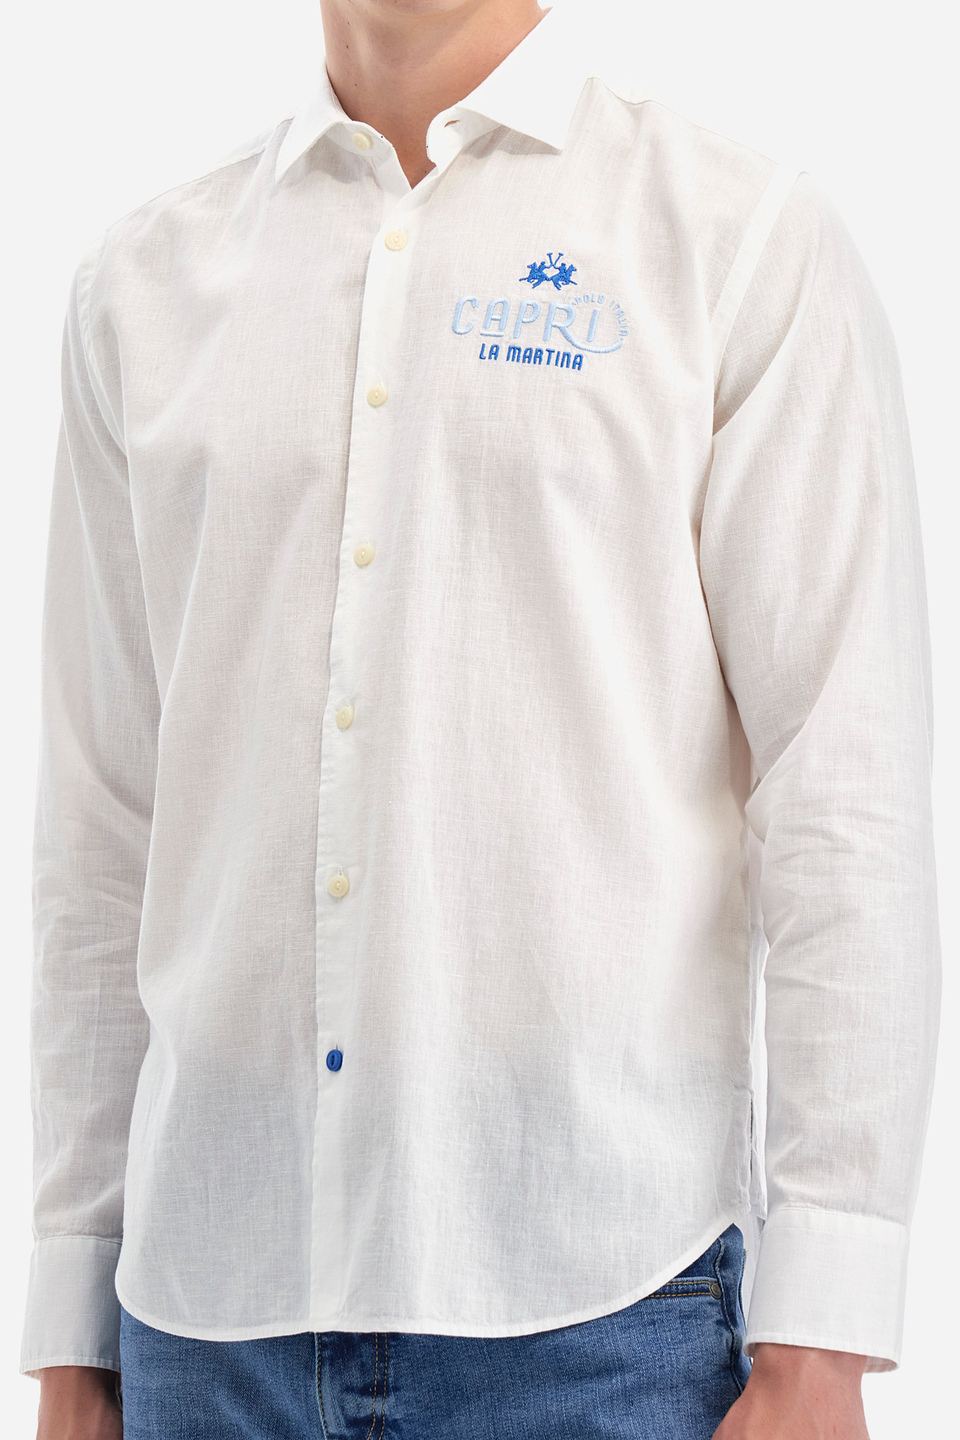 Cotton and linen shirt - Innocent | La Martina - Official Online Shop